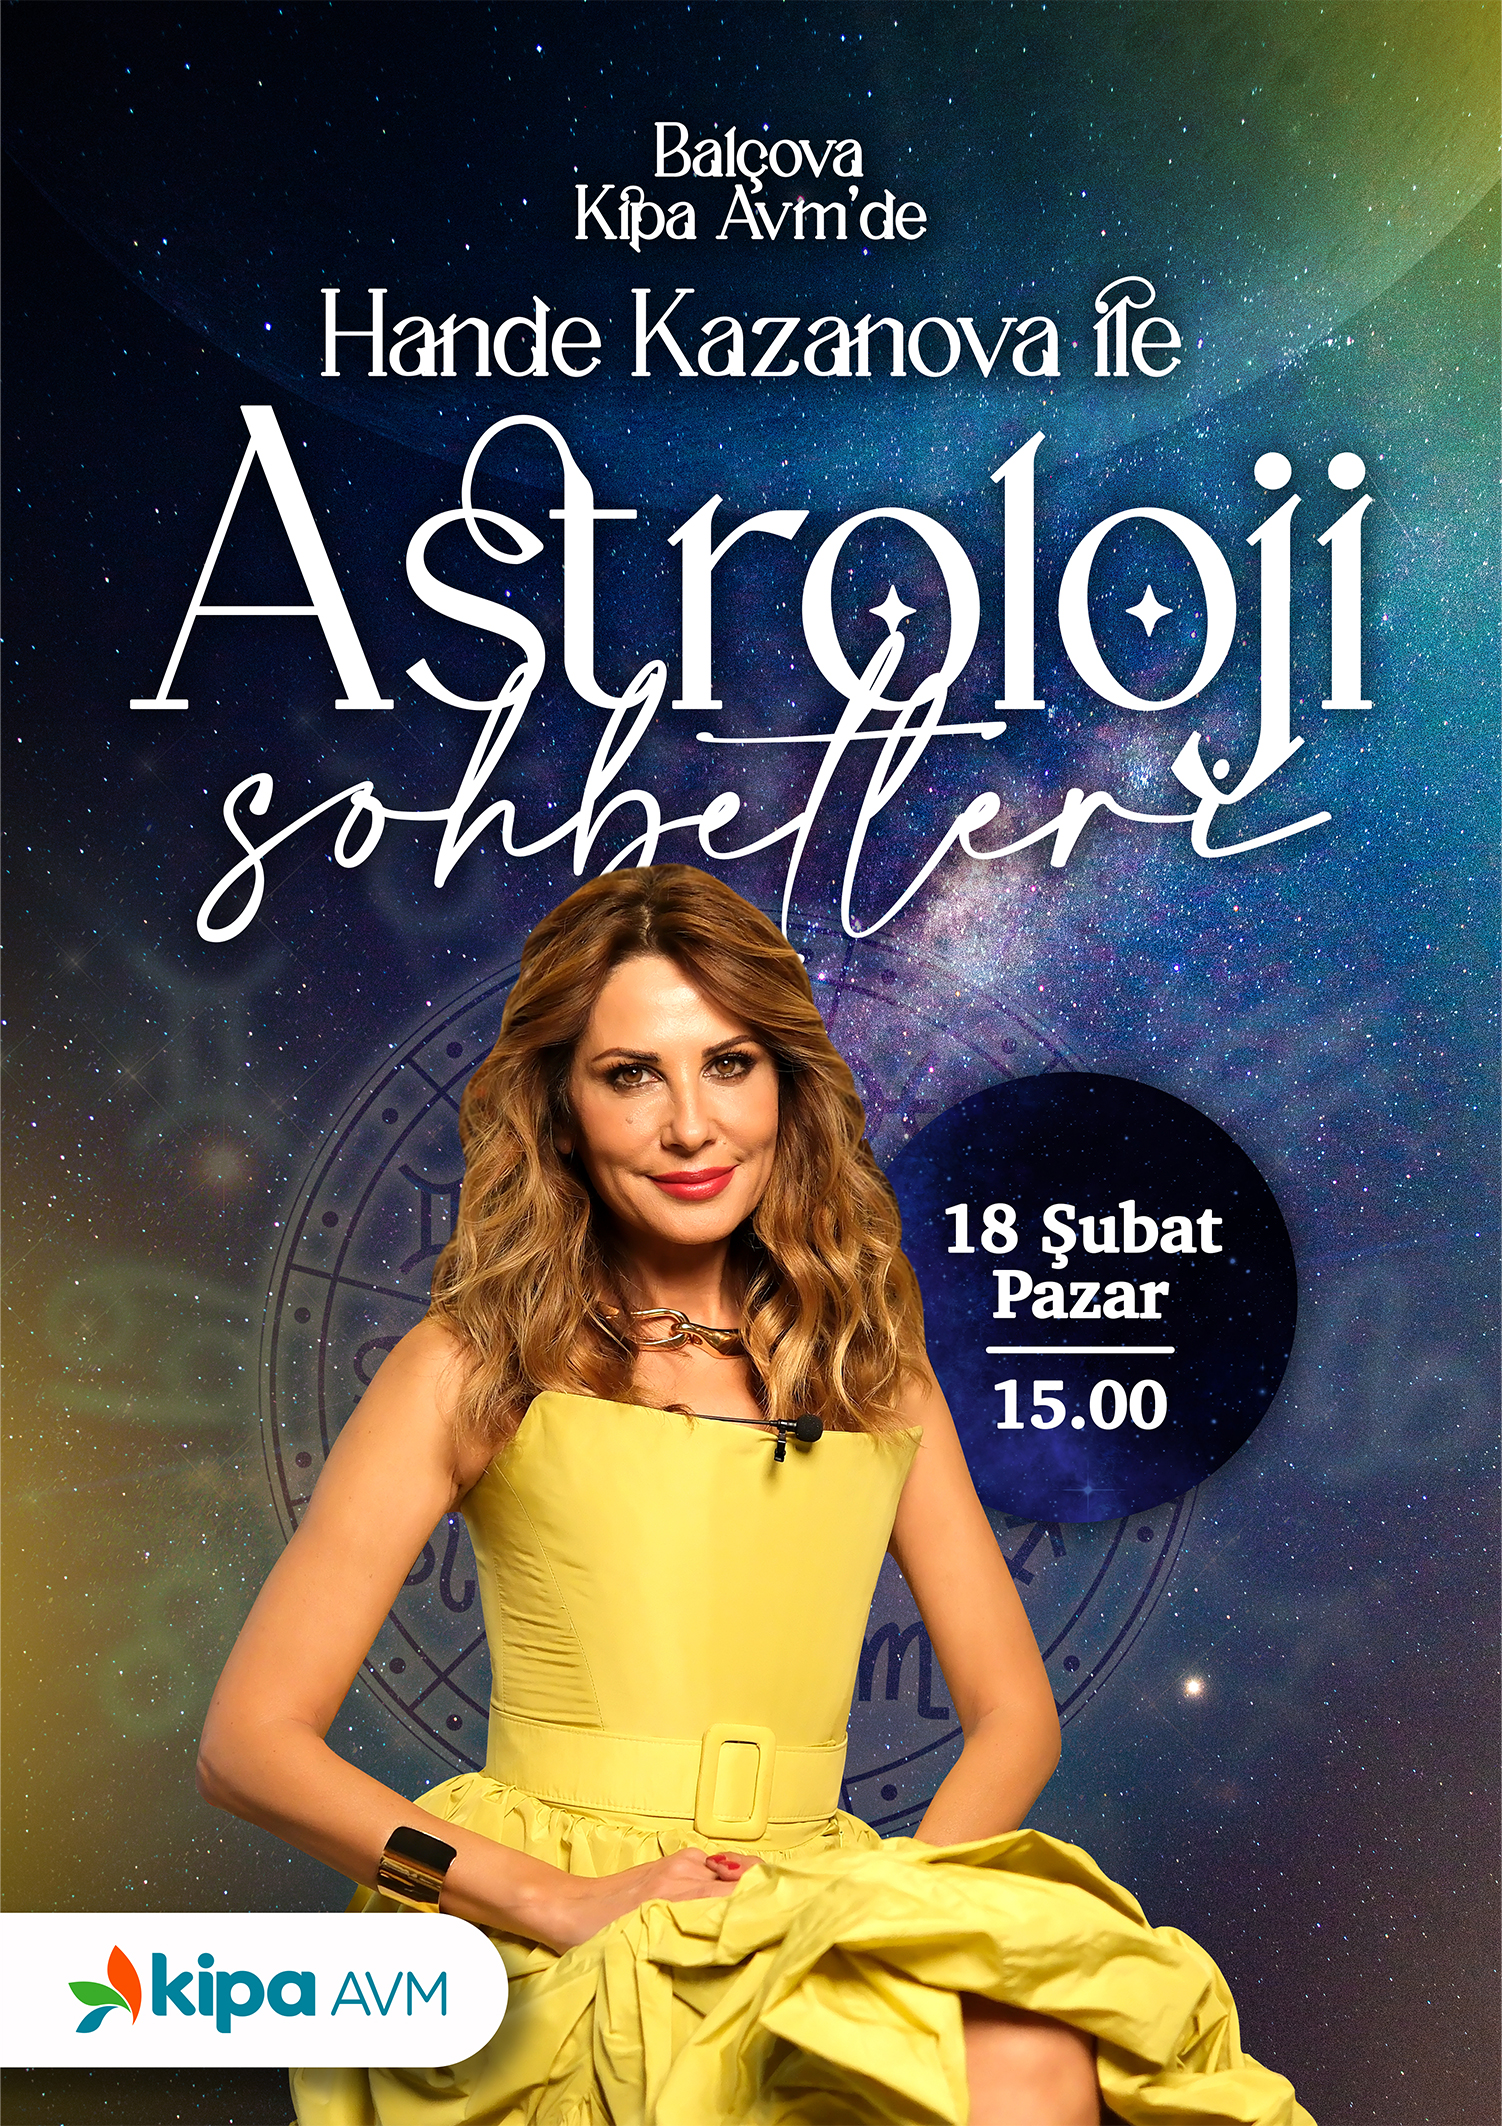 Balçova Kipa AVM'de Hande Kazanova ile Astroloji Sohbetleri!